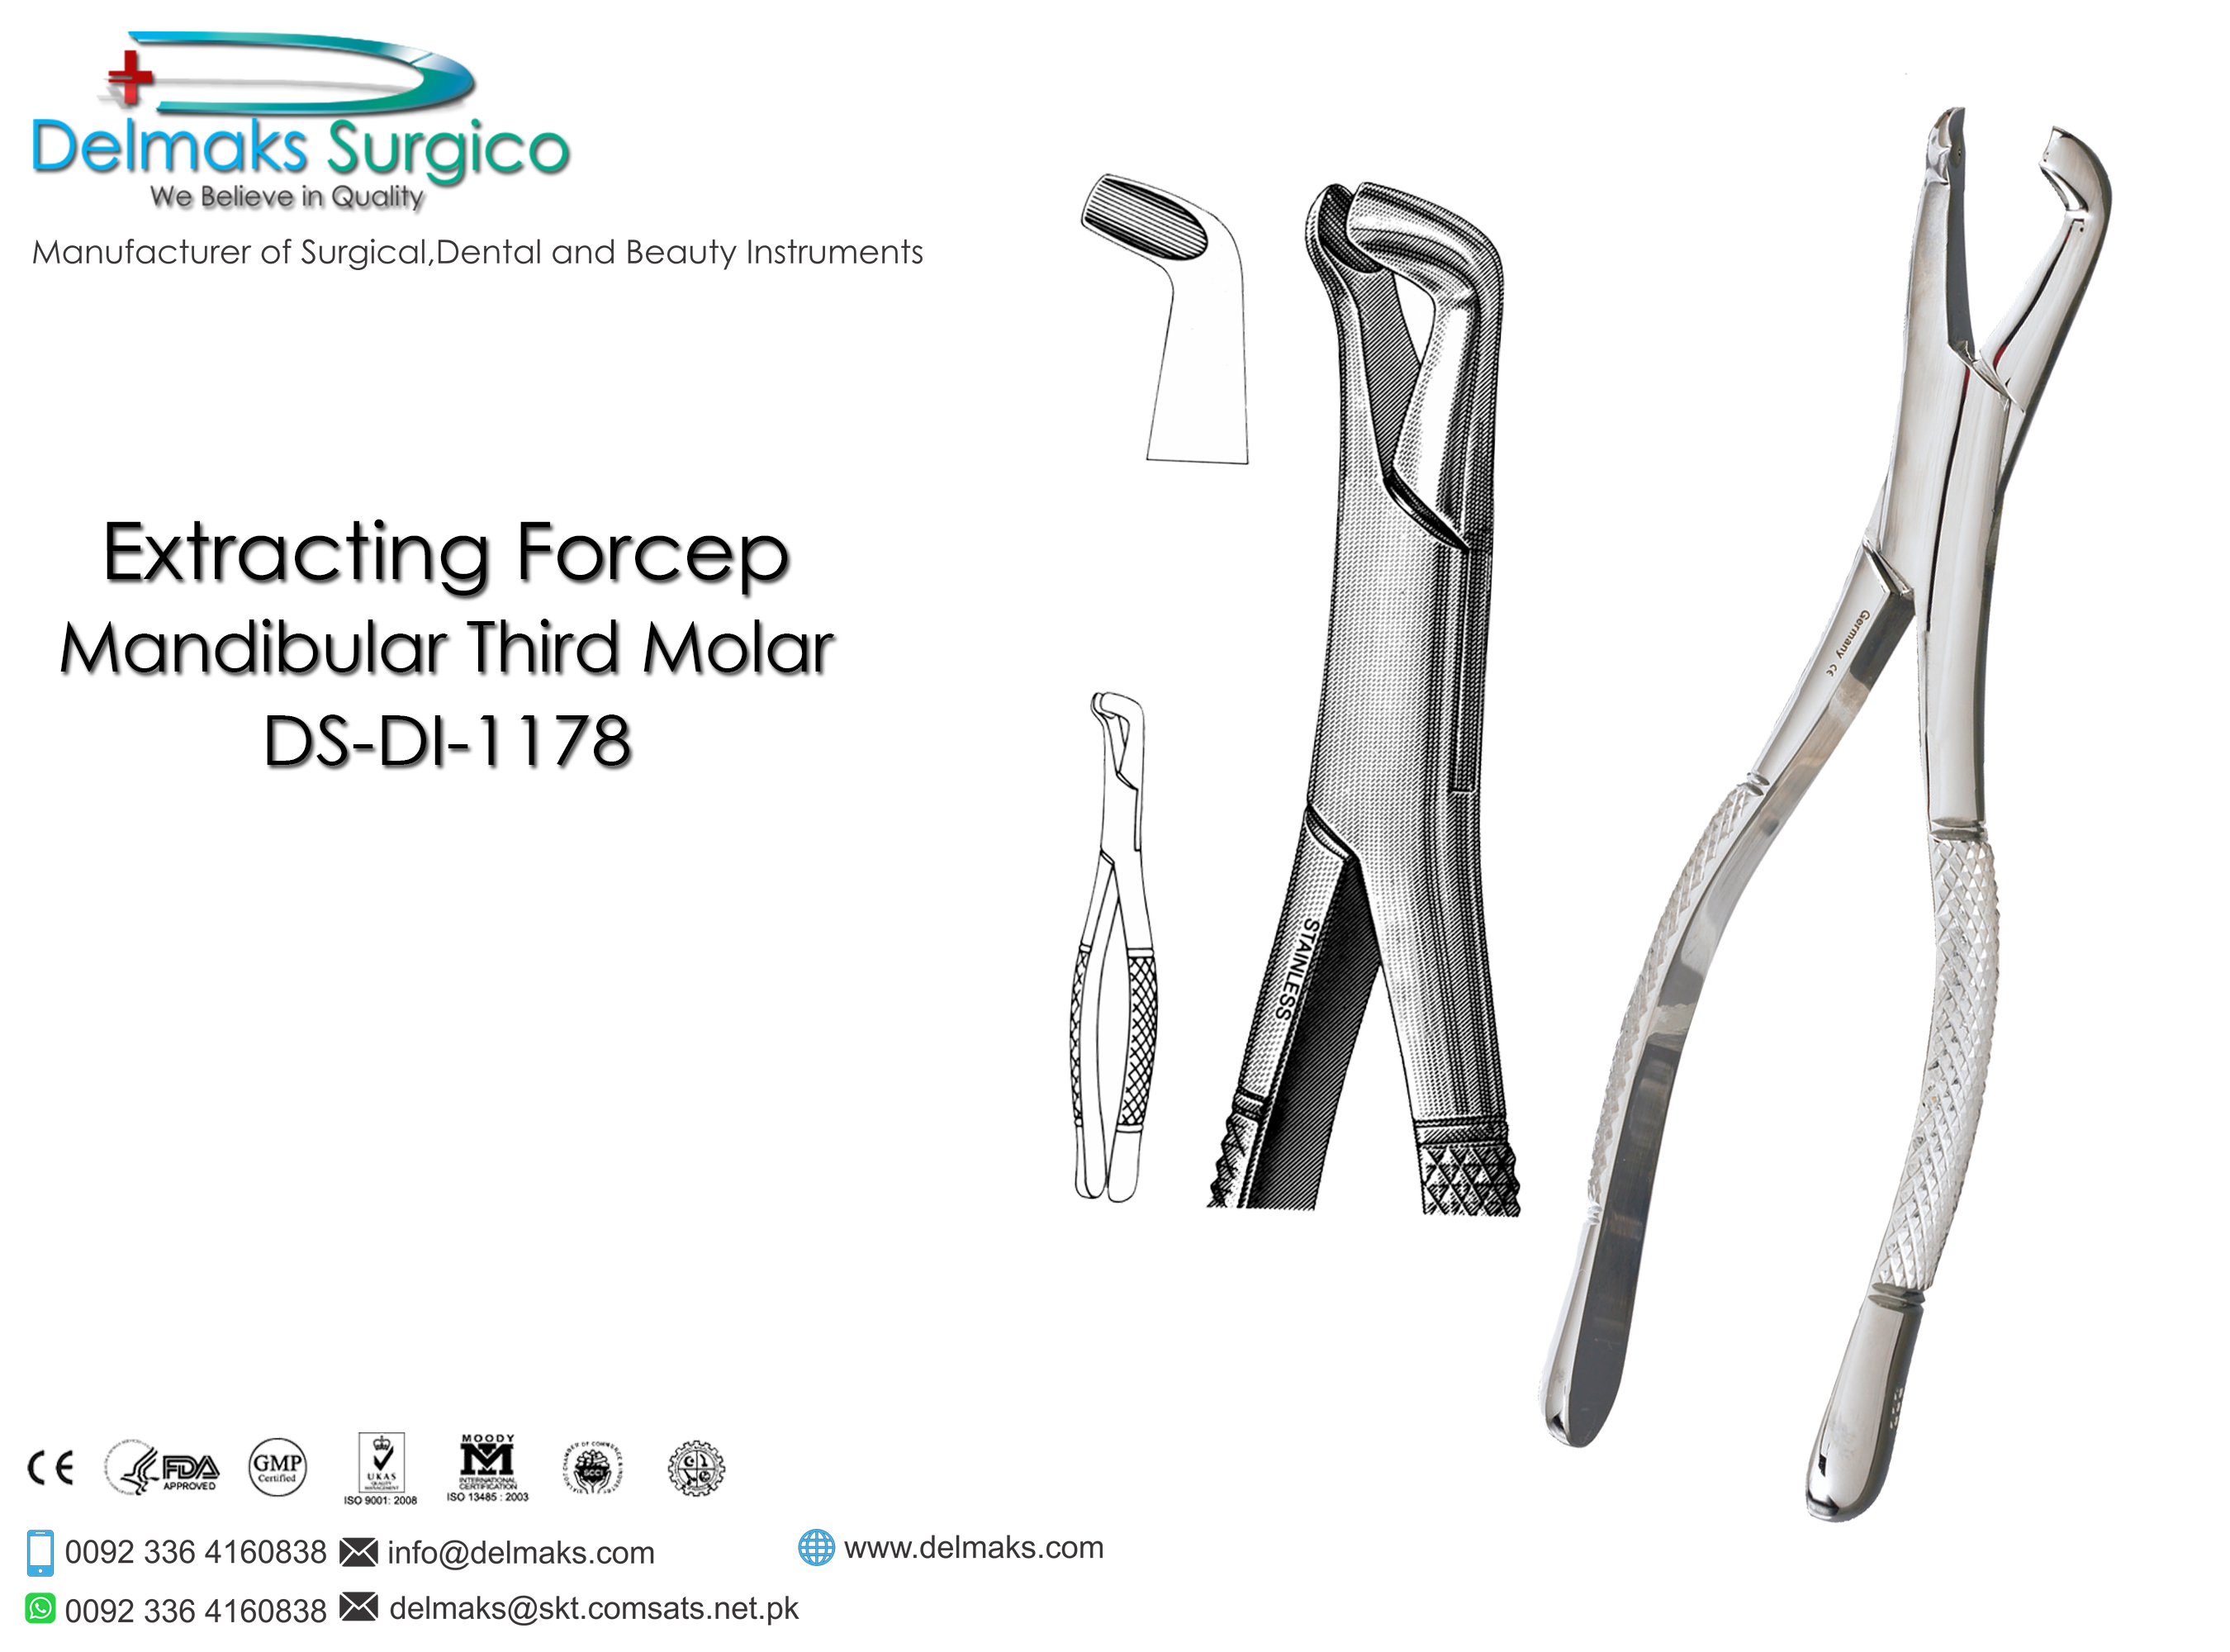 Extracting Forceps (Mandibular Third Molars)-Oral and Maxillofacial Surgery Instruments-Dental Instruments-Delmaks Surgico 